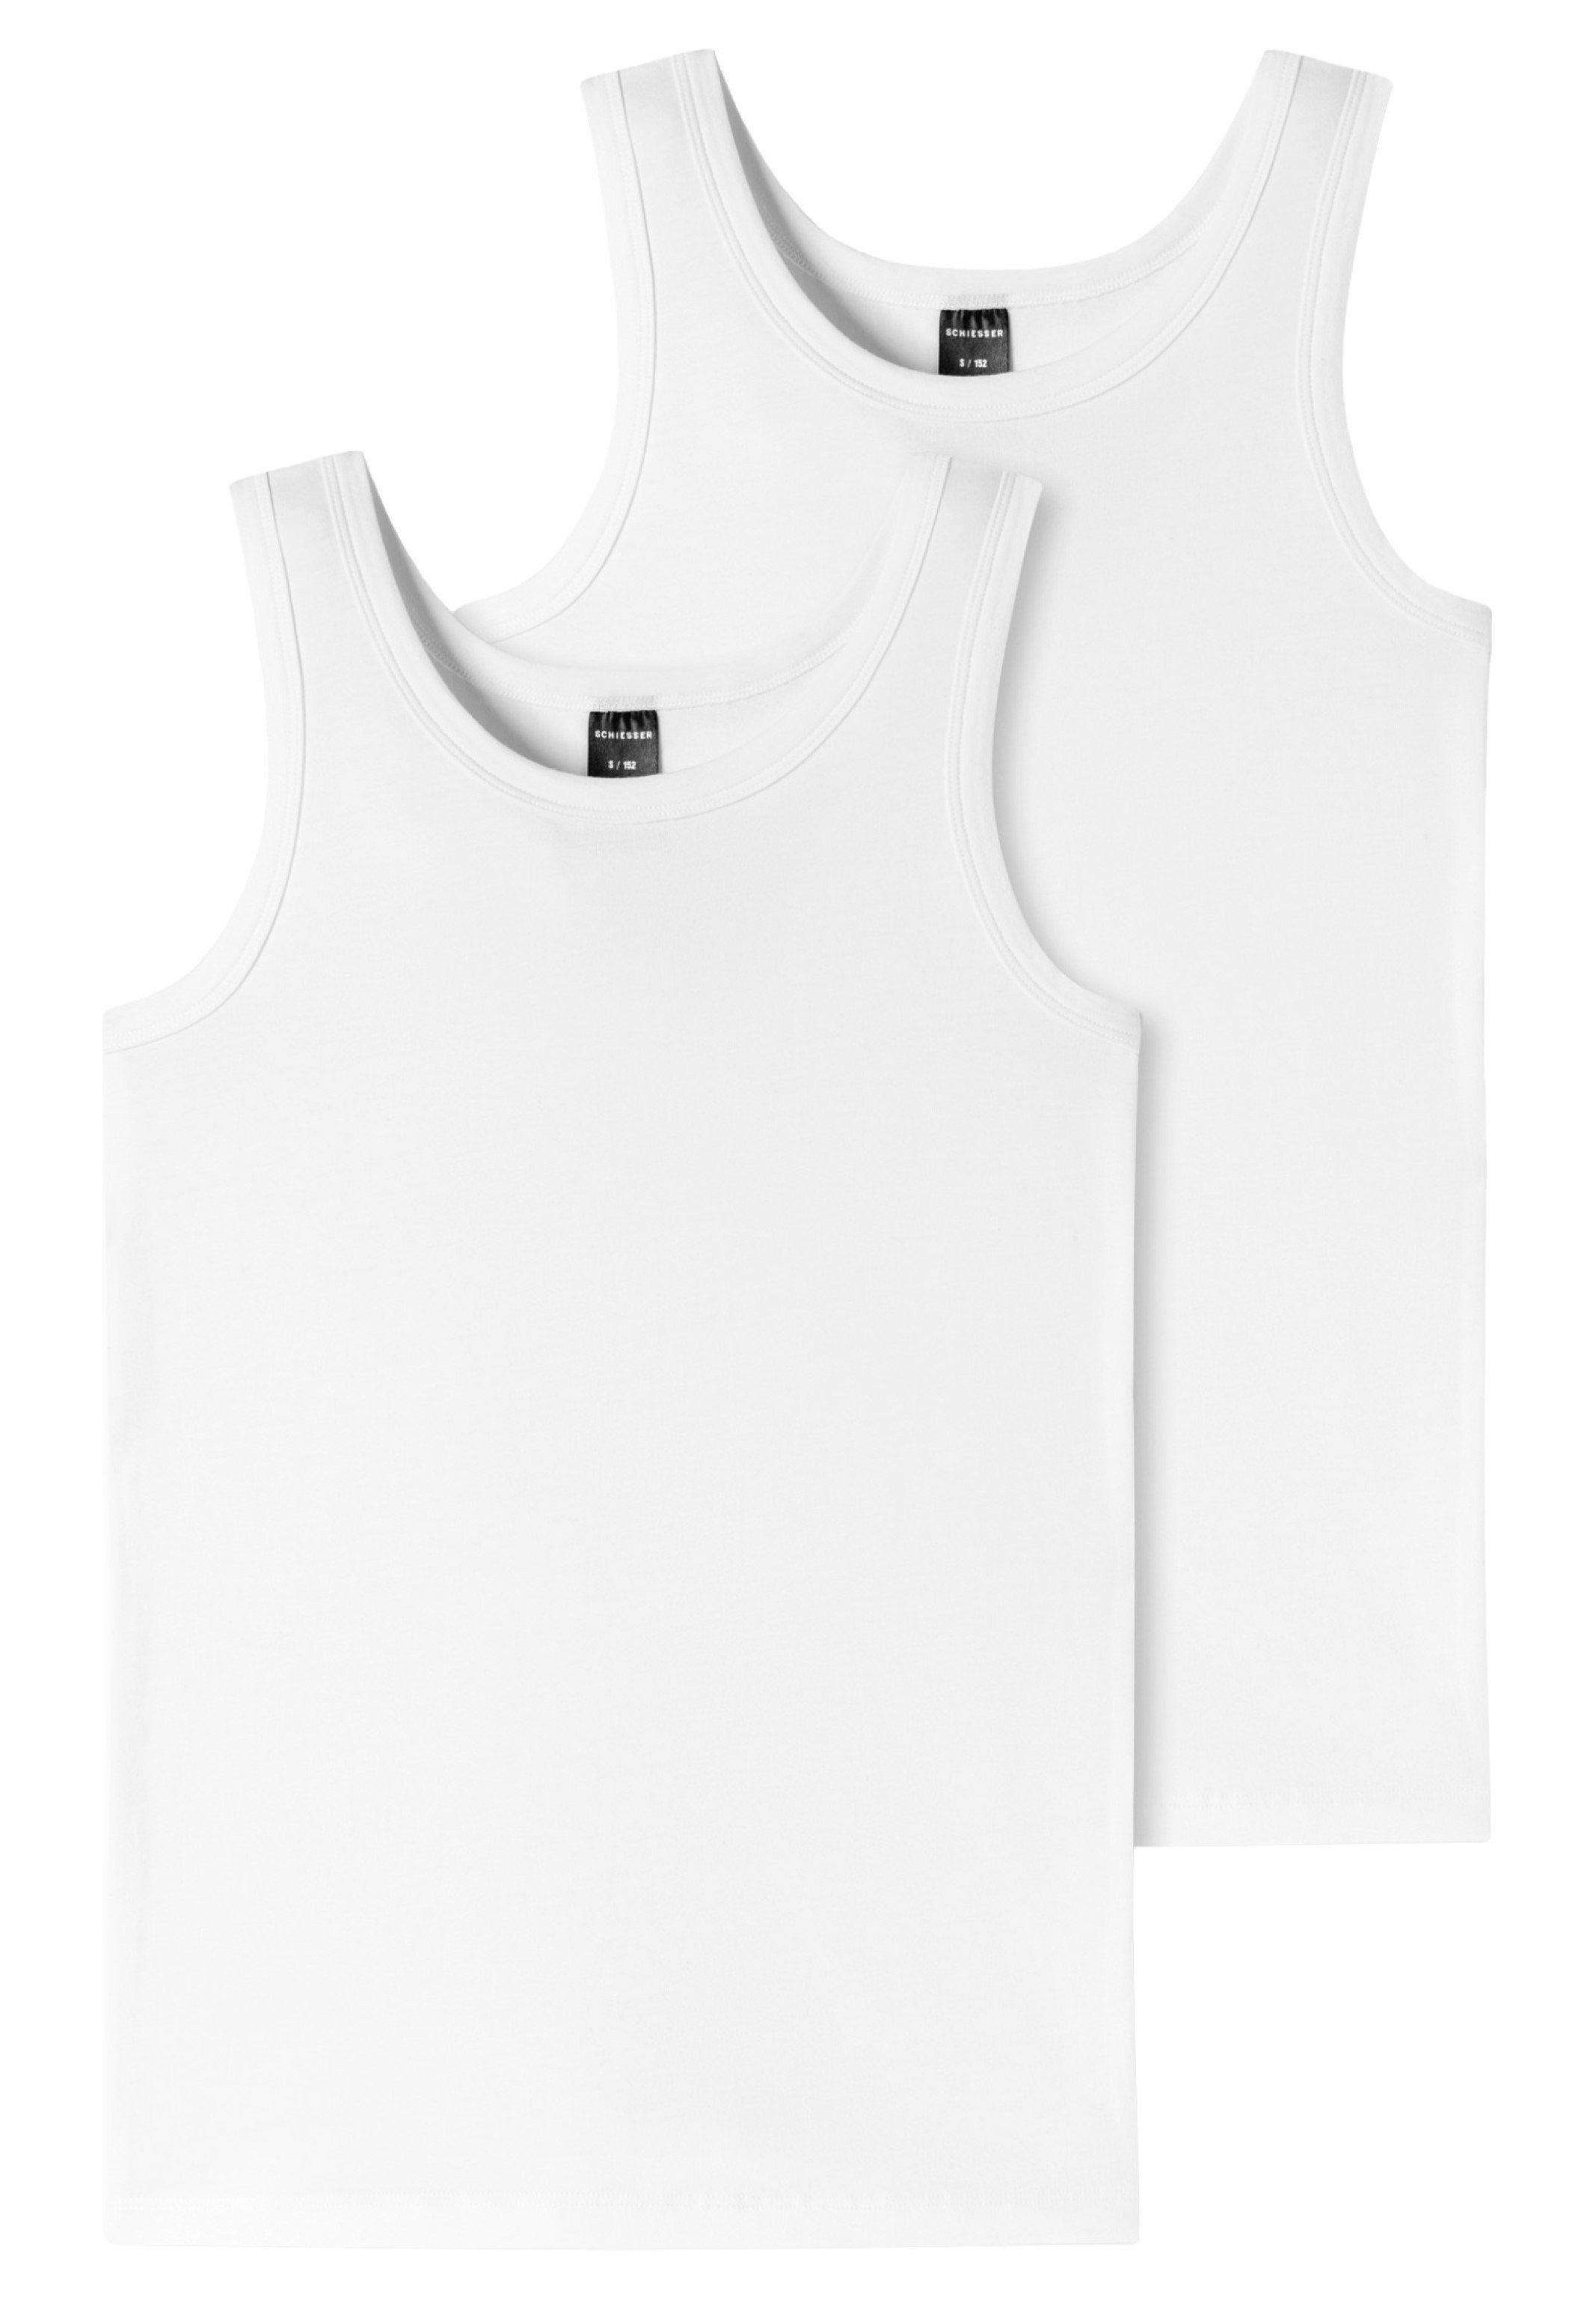 Schiesser Unterhemd 2er Pack Teens Boys 95/5 Organic Cotton (Spar-Set, 2-St) Unterhemd / Tanktop - Baumwolle - Runder Halsausschnitt Weiß